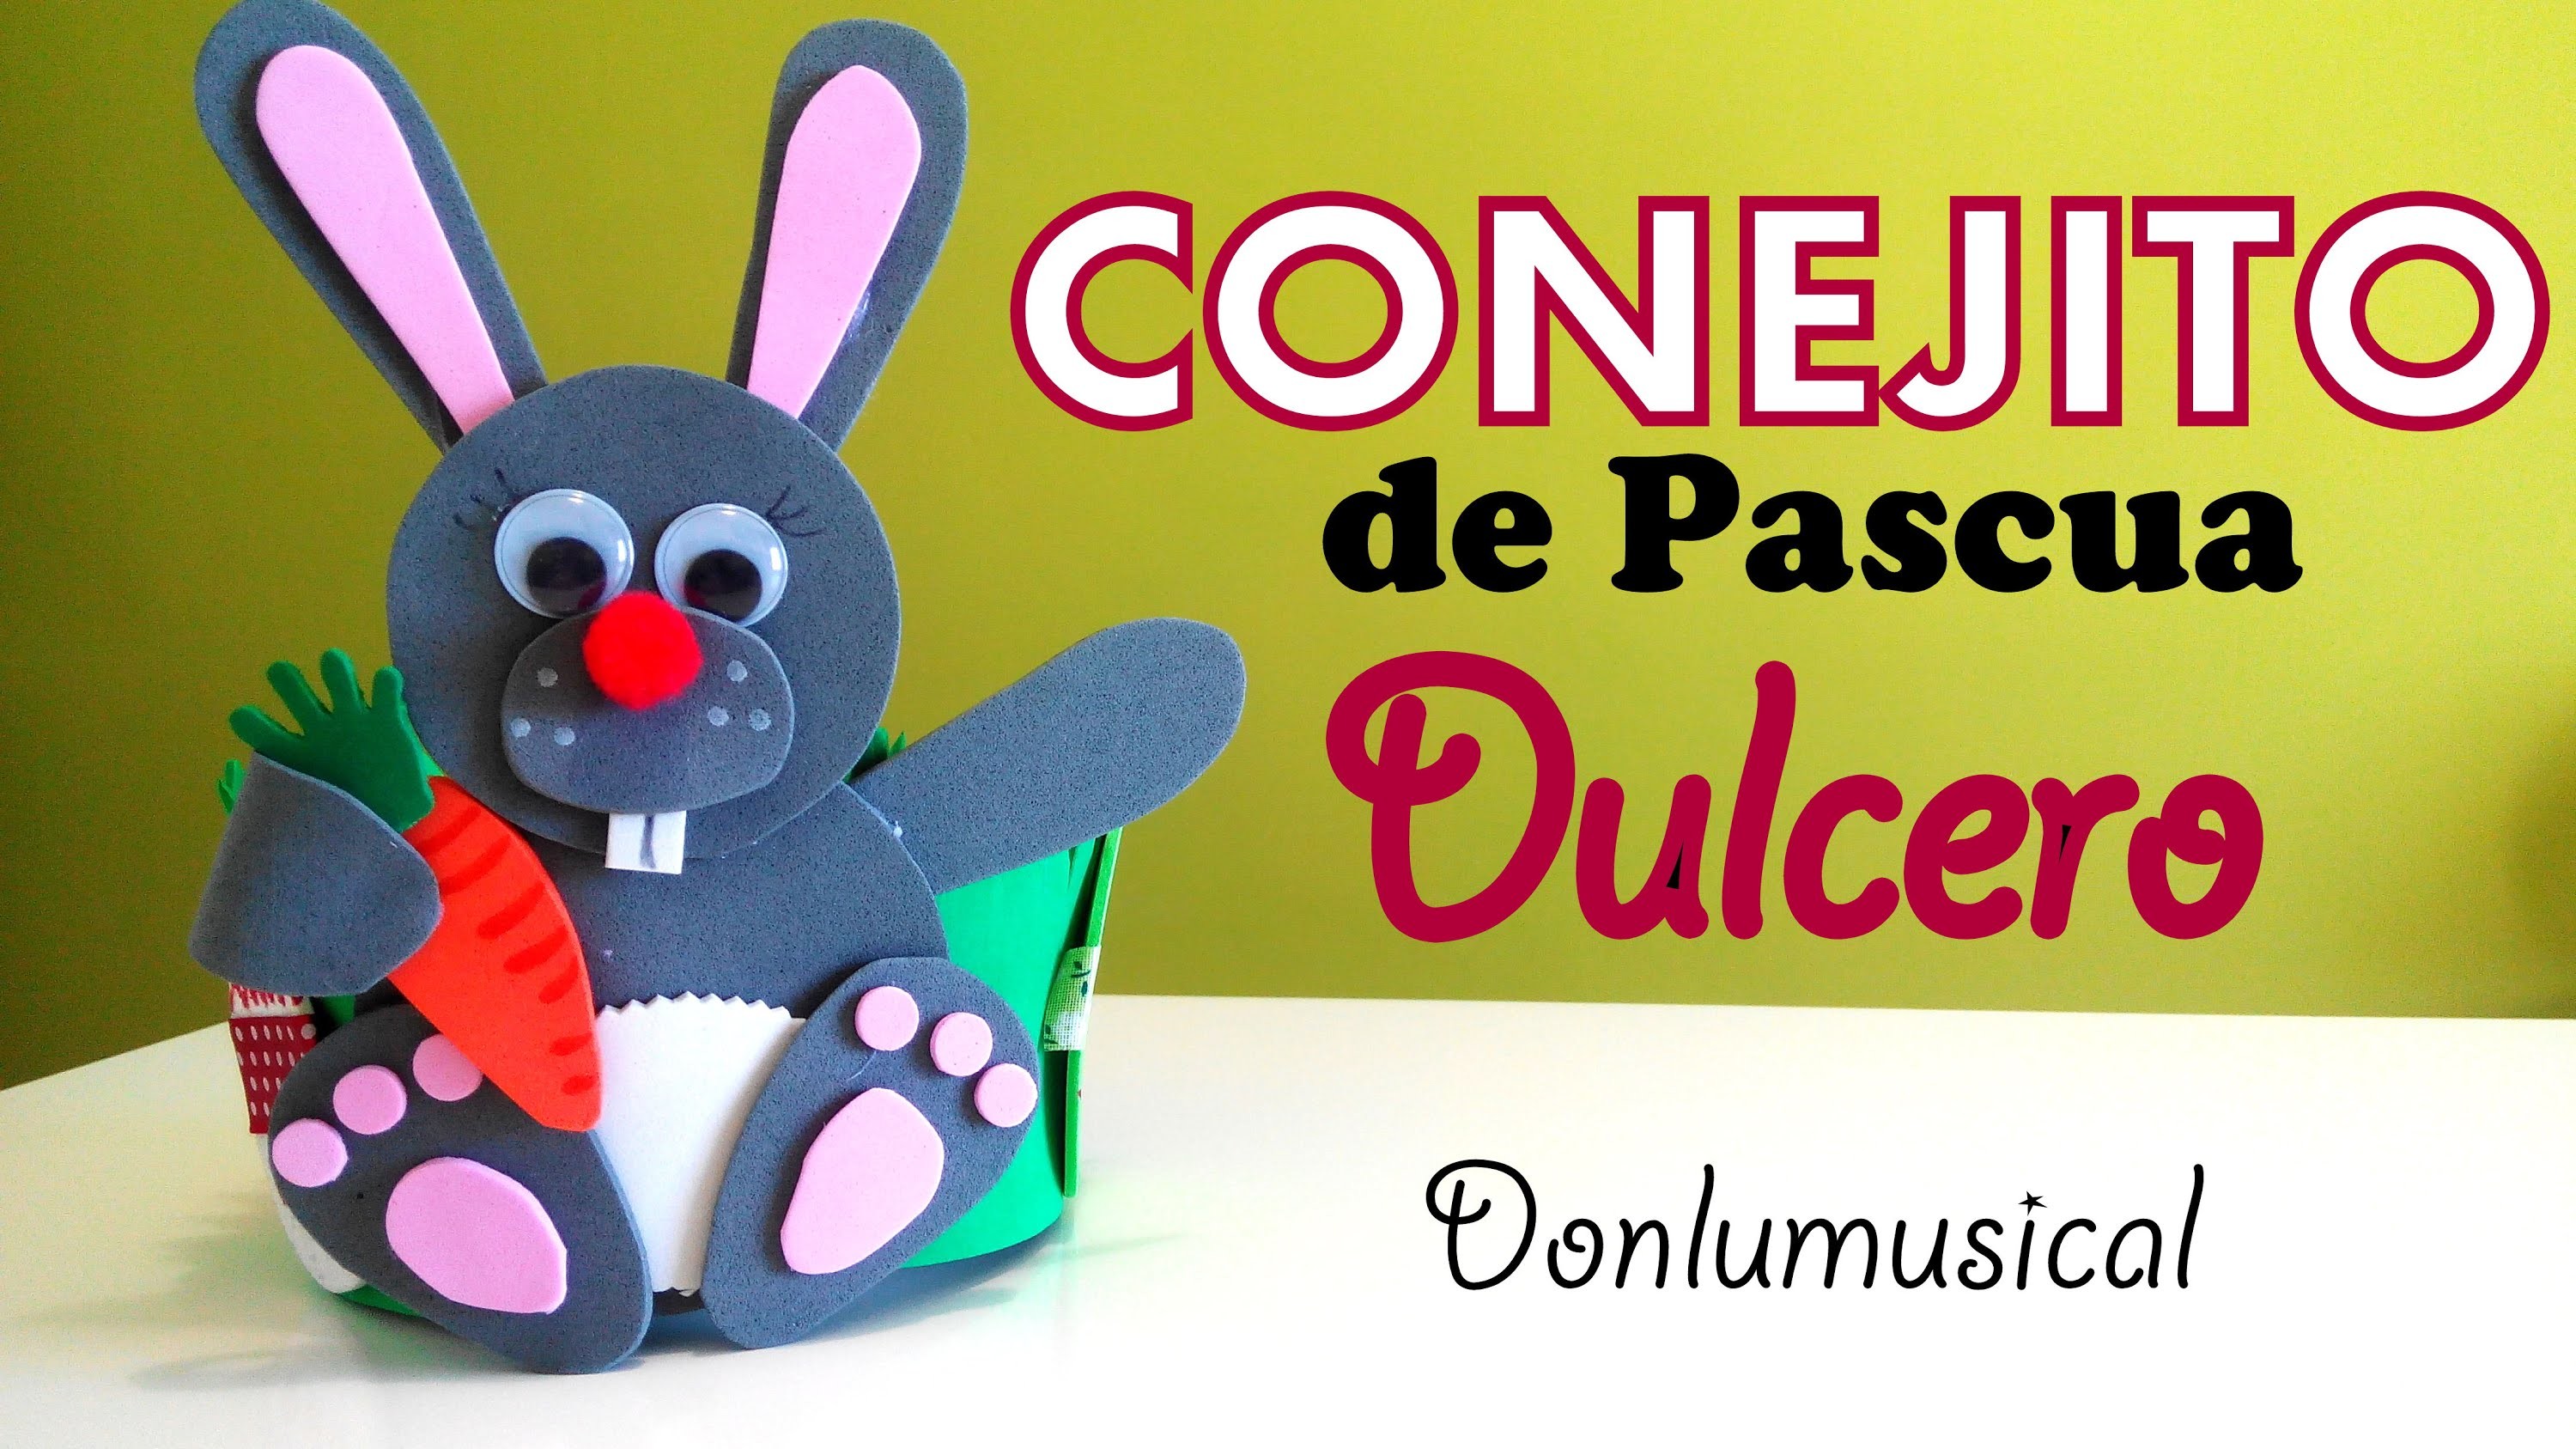 DIY Conejito dulcero de Pascua. Easter bunny